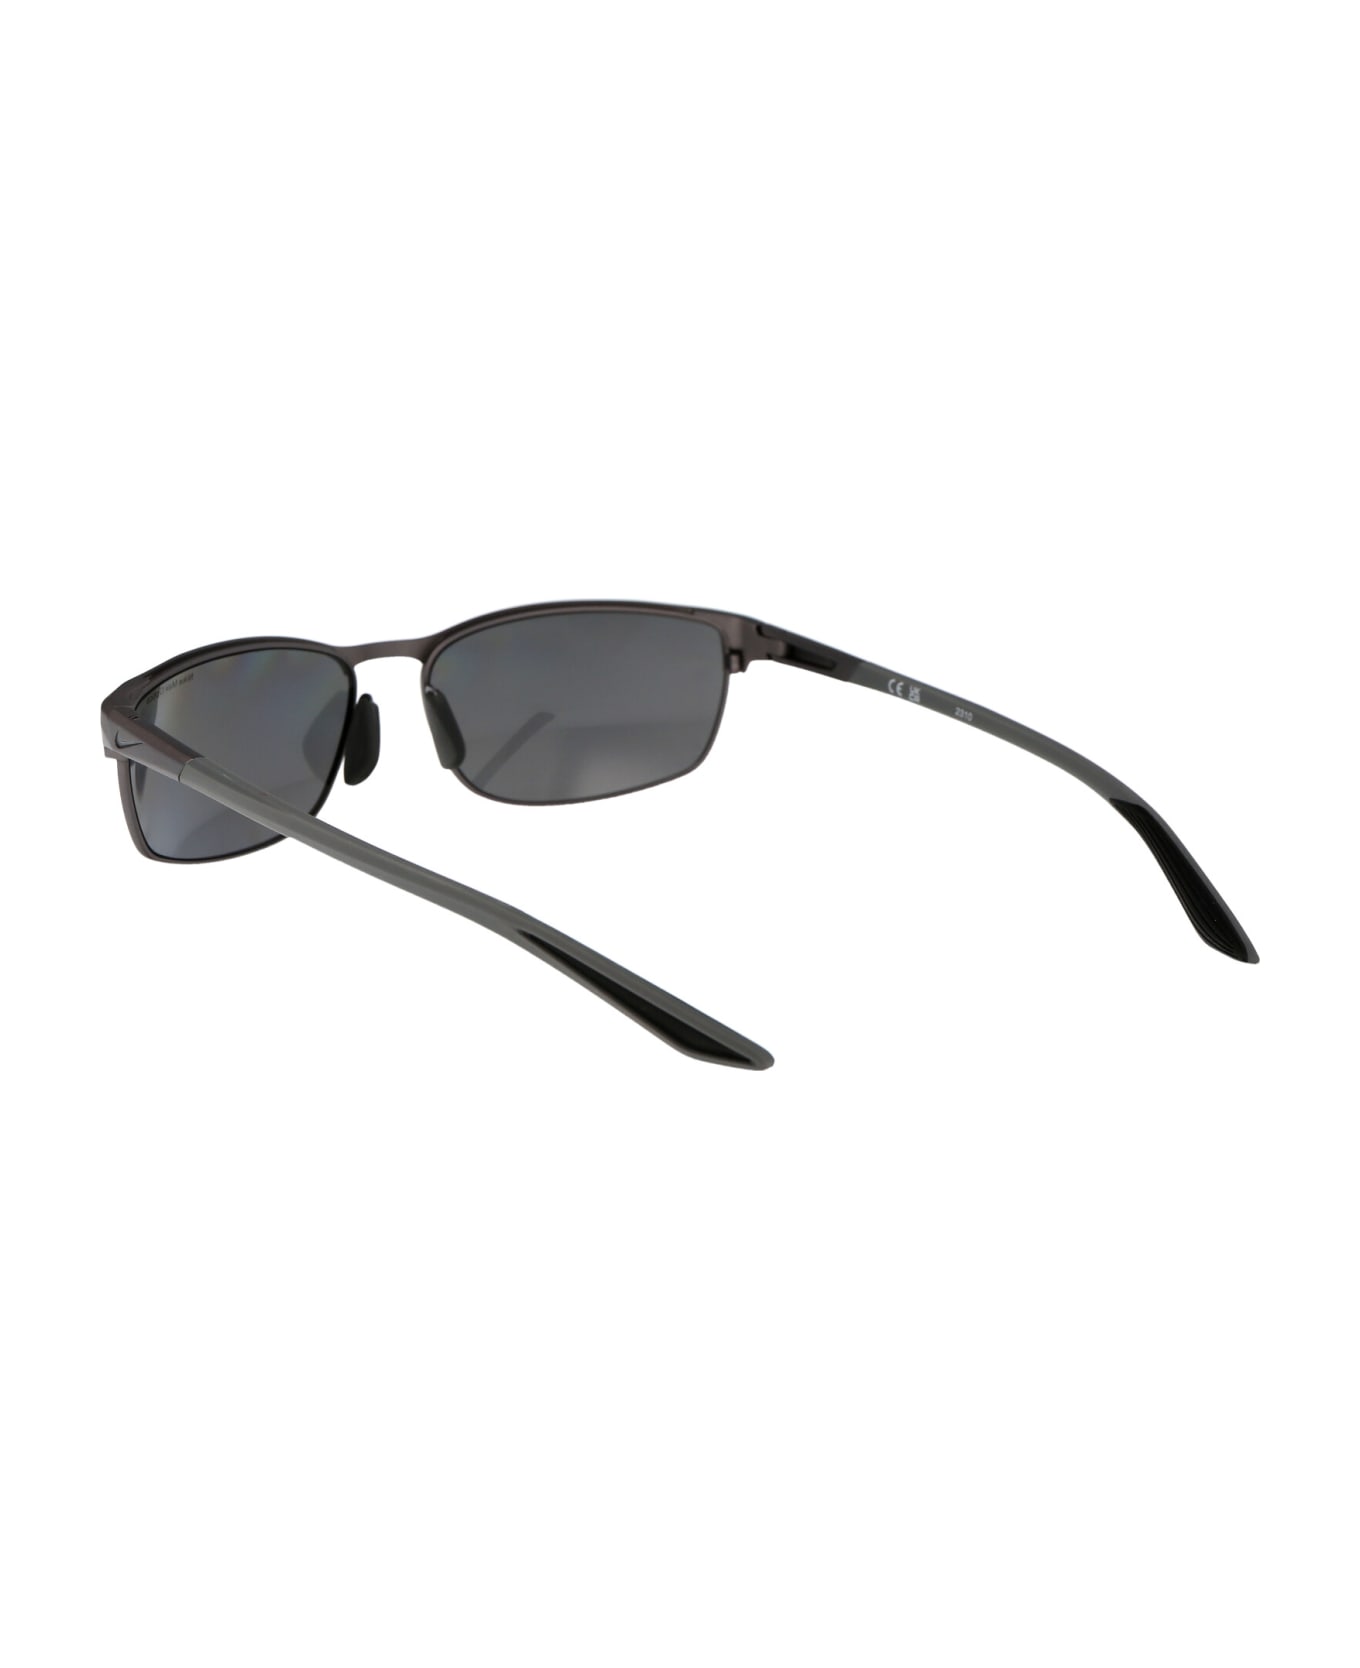 Nike Modern Metal Sunglasses - 918 GREY W/ SILVER FLASH SATIN GUNMETAL